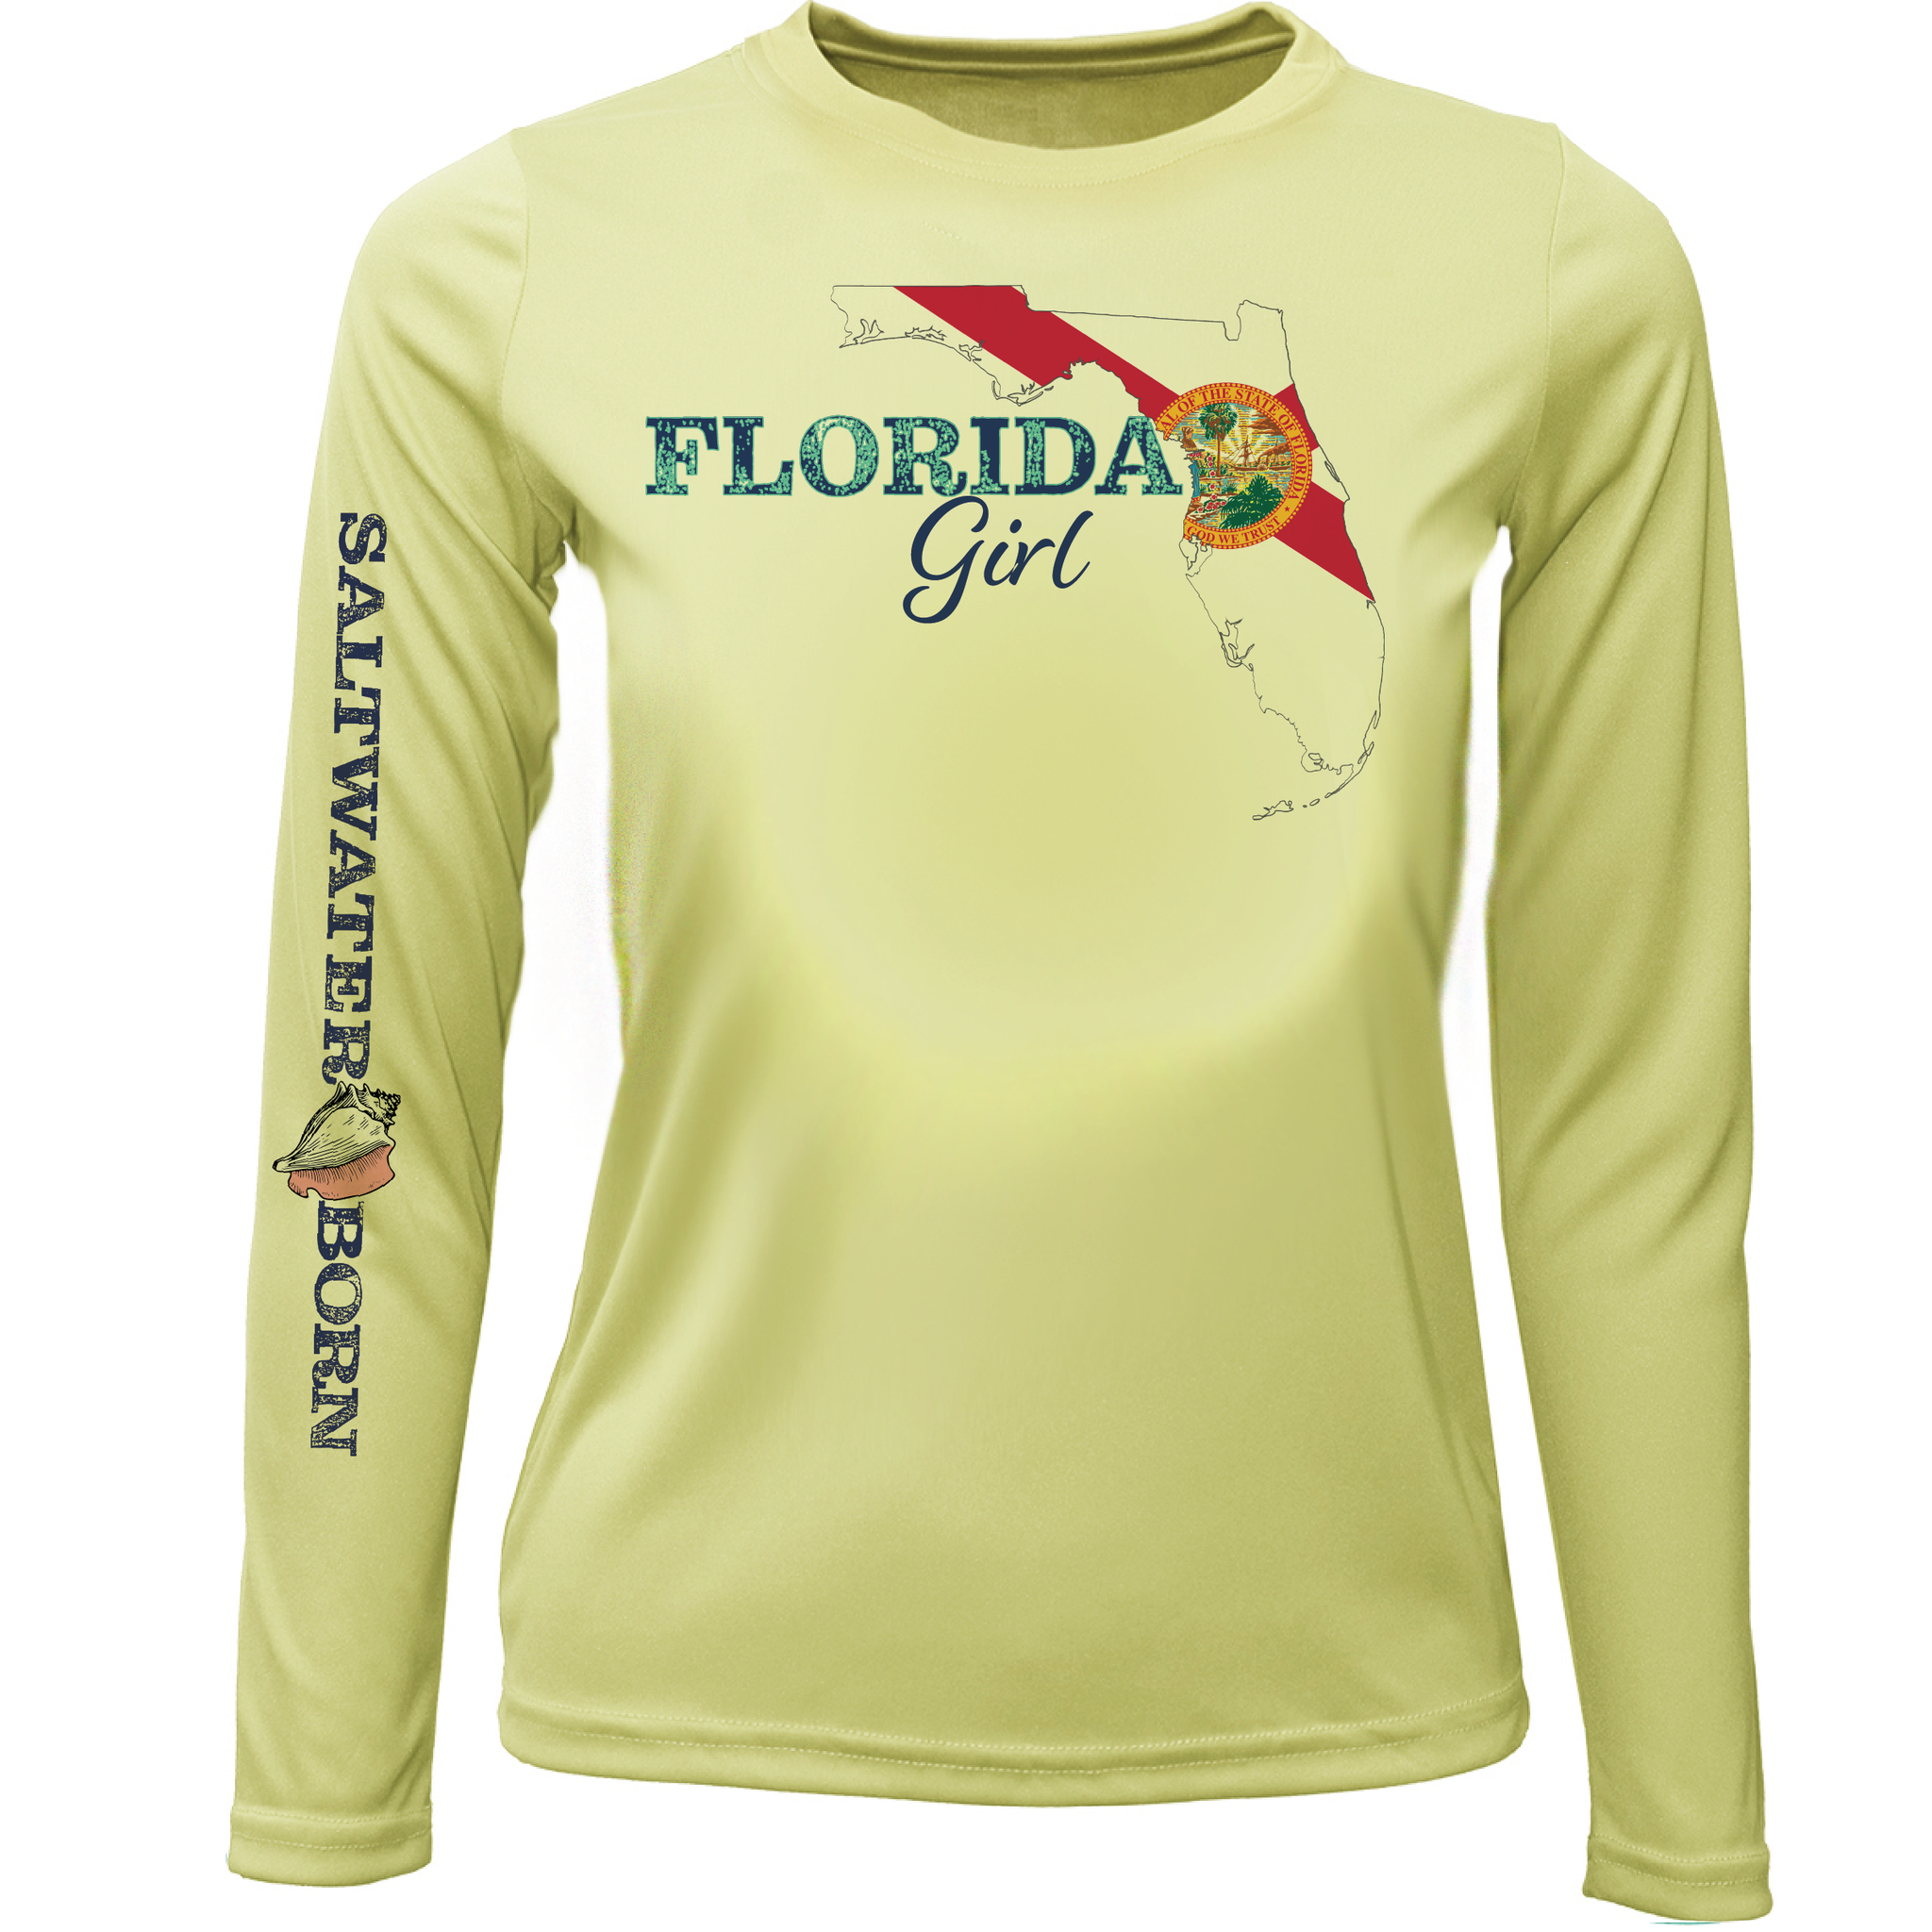 Key West, FL Girl's Long Sleeve UPF 50+ Dry-Fit Shirt